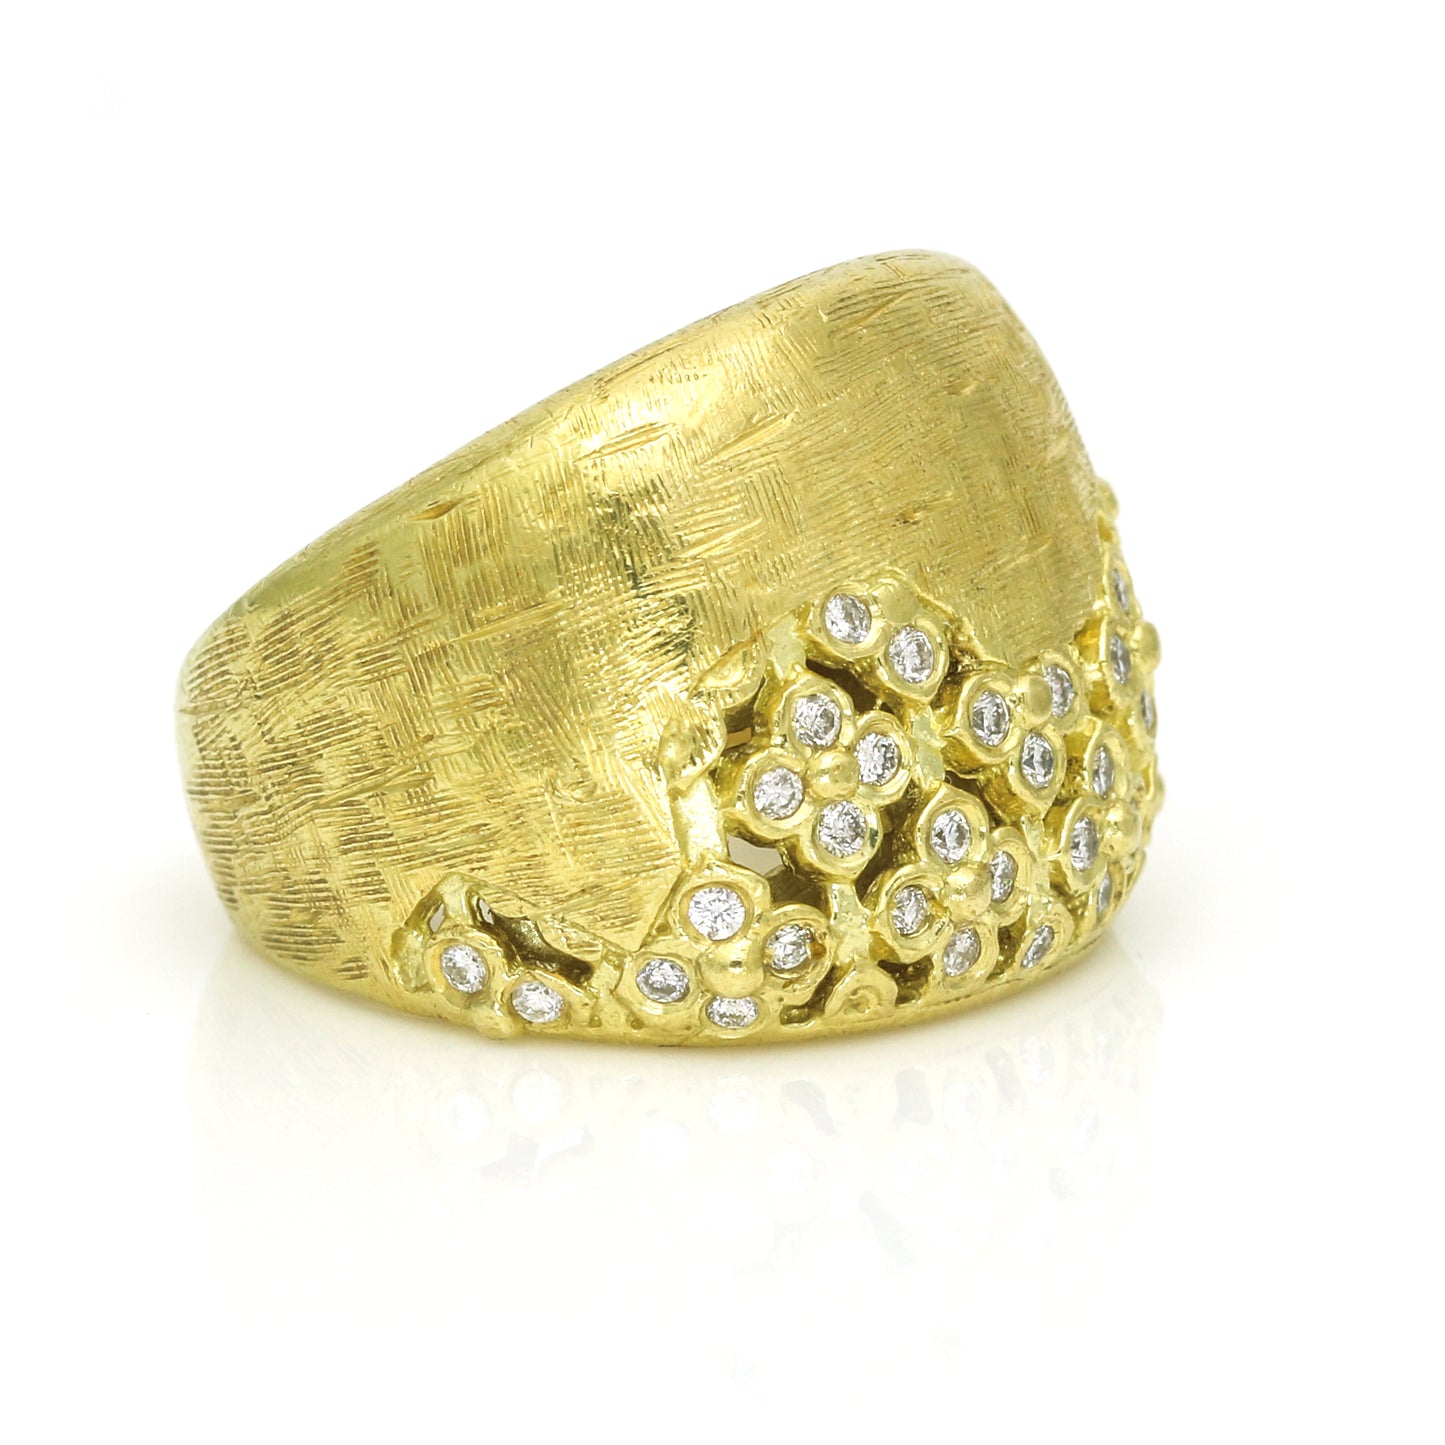 Sambolian House of Jewelry Diamond Statement Ring in 18k Yellow Gold